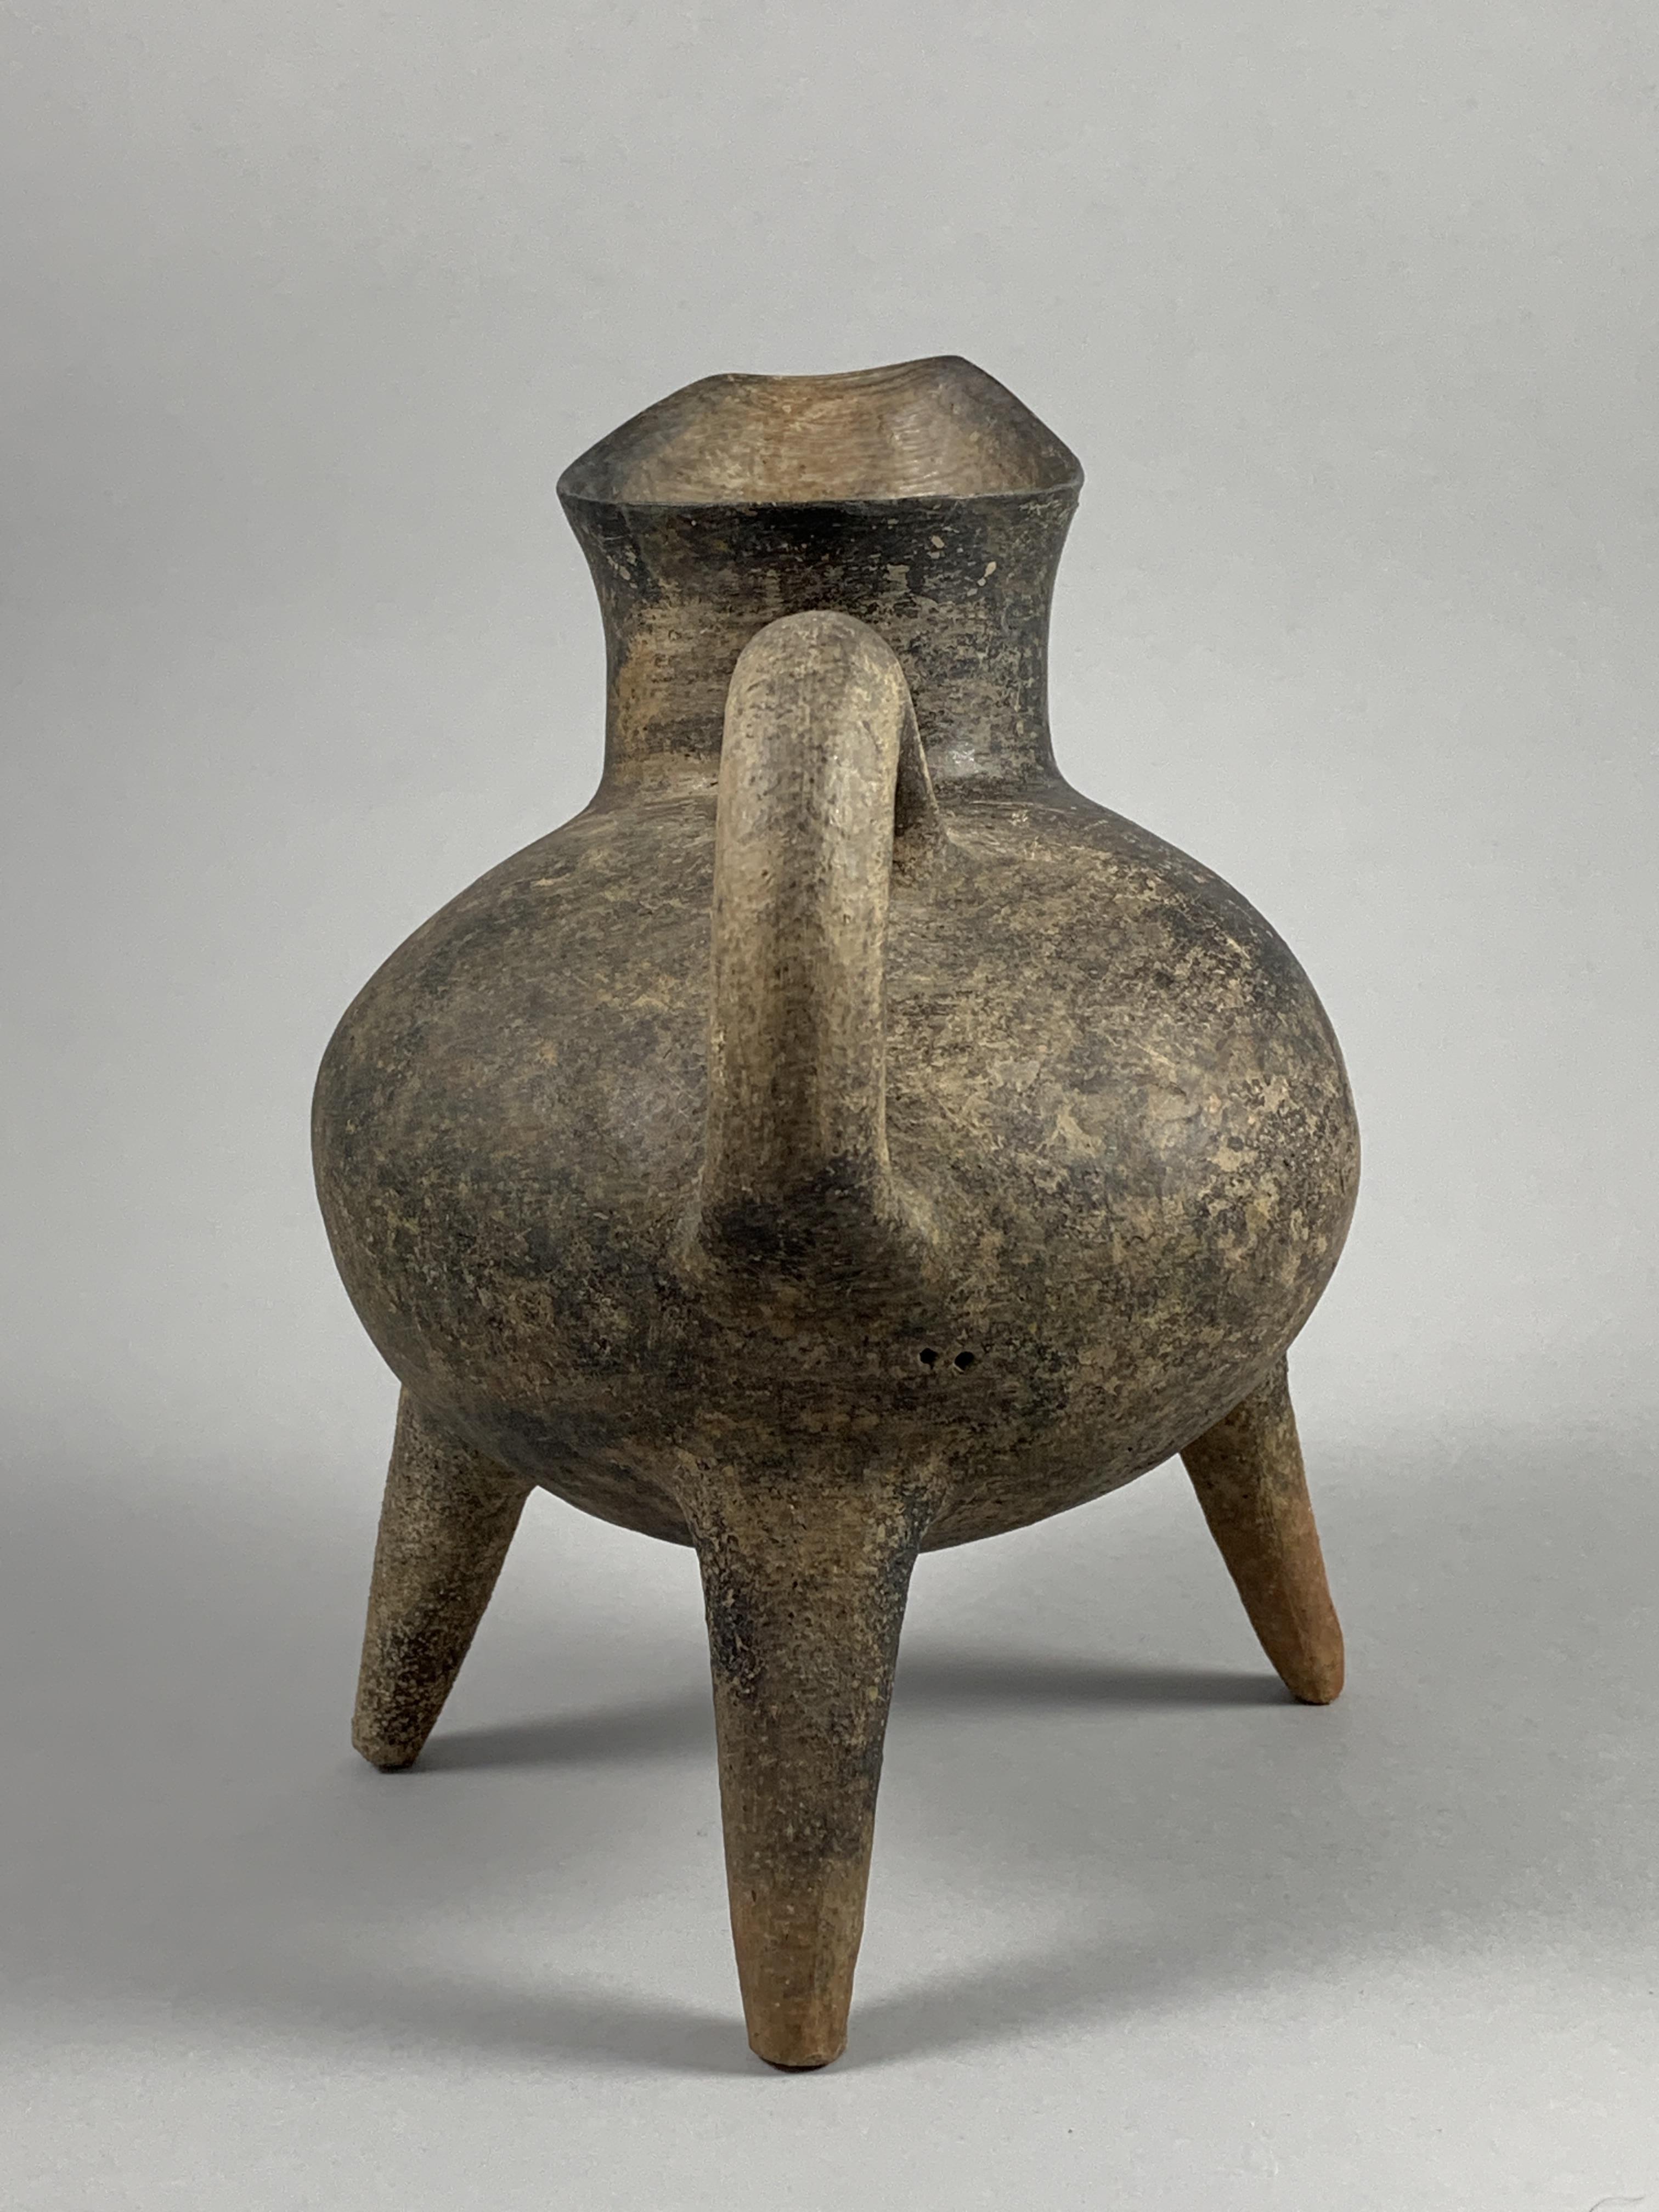 A Tripod Pottery Vessel, Liangzhu Culture (3300-2200 Bc) - Image 12 of 15